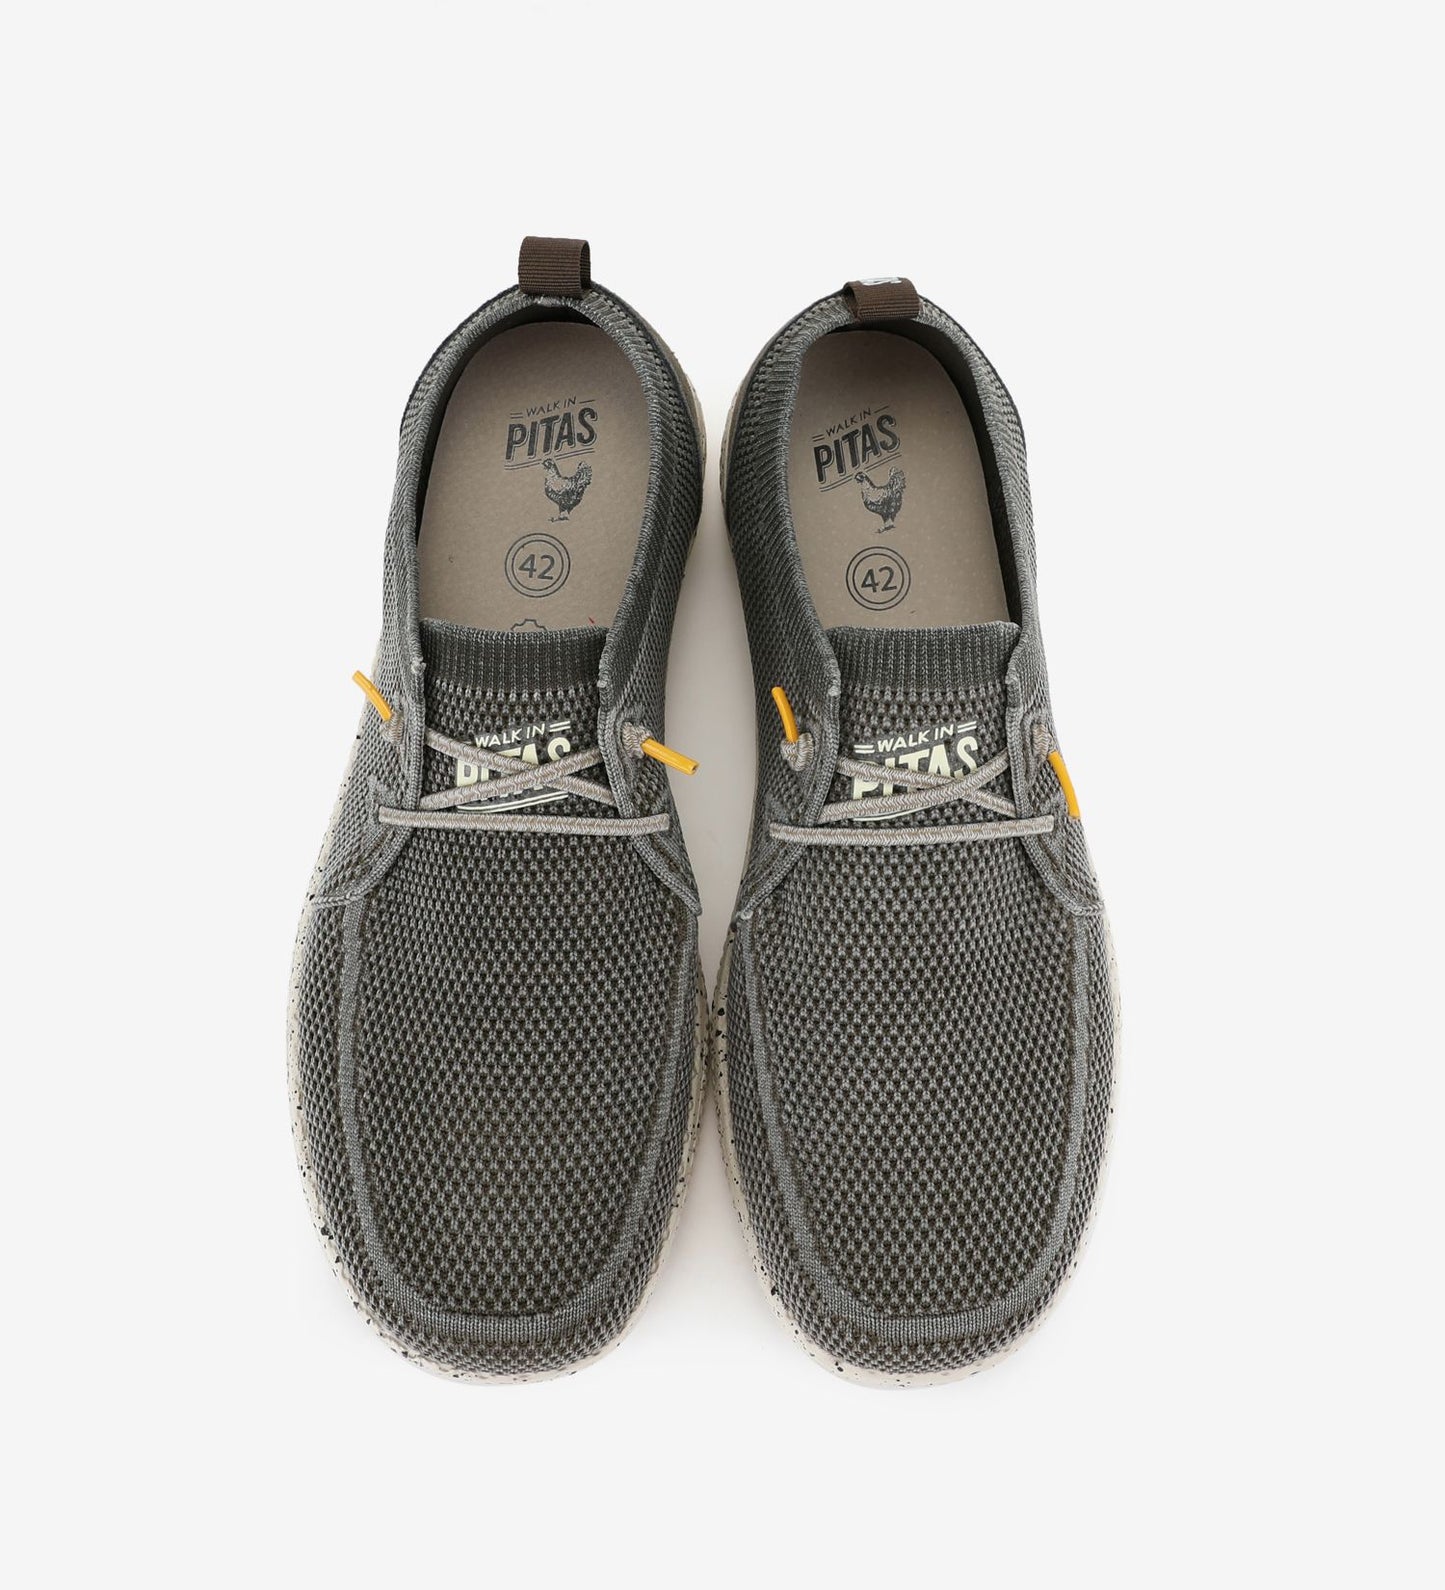 WALK IN PITAS wp150-fly  washed wallabi zapato cordón de algodón ultra ligero kakhi